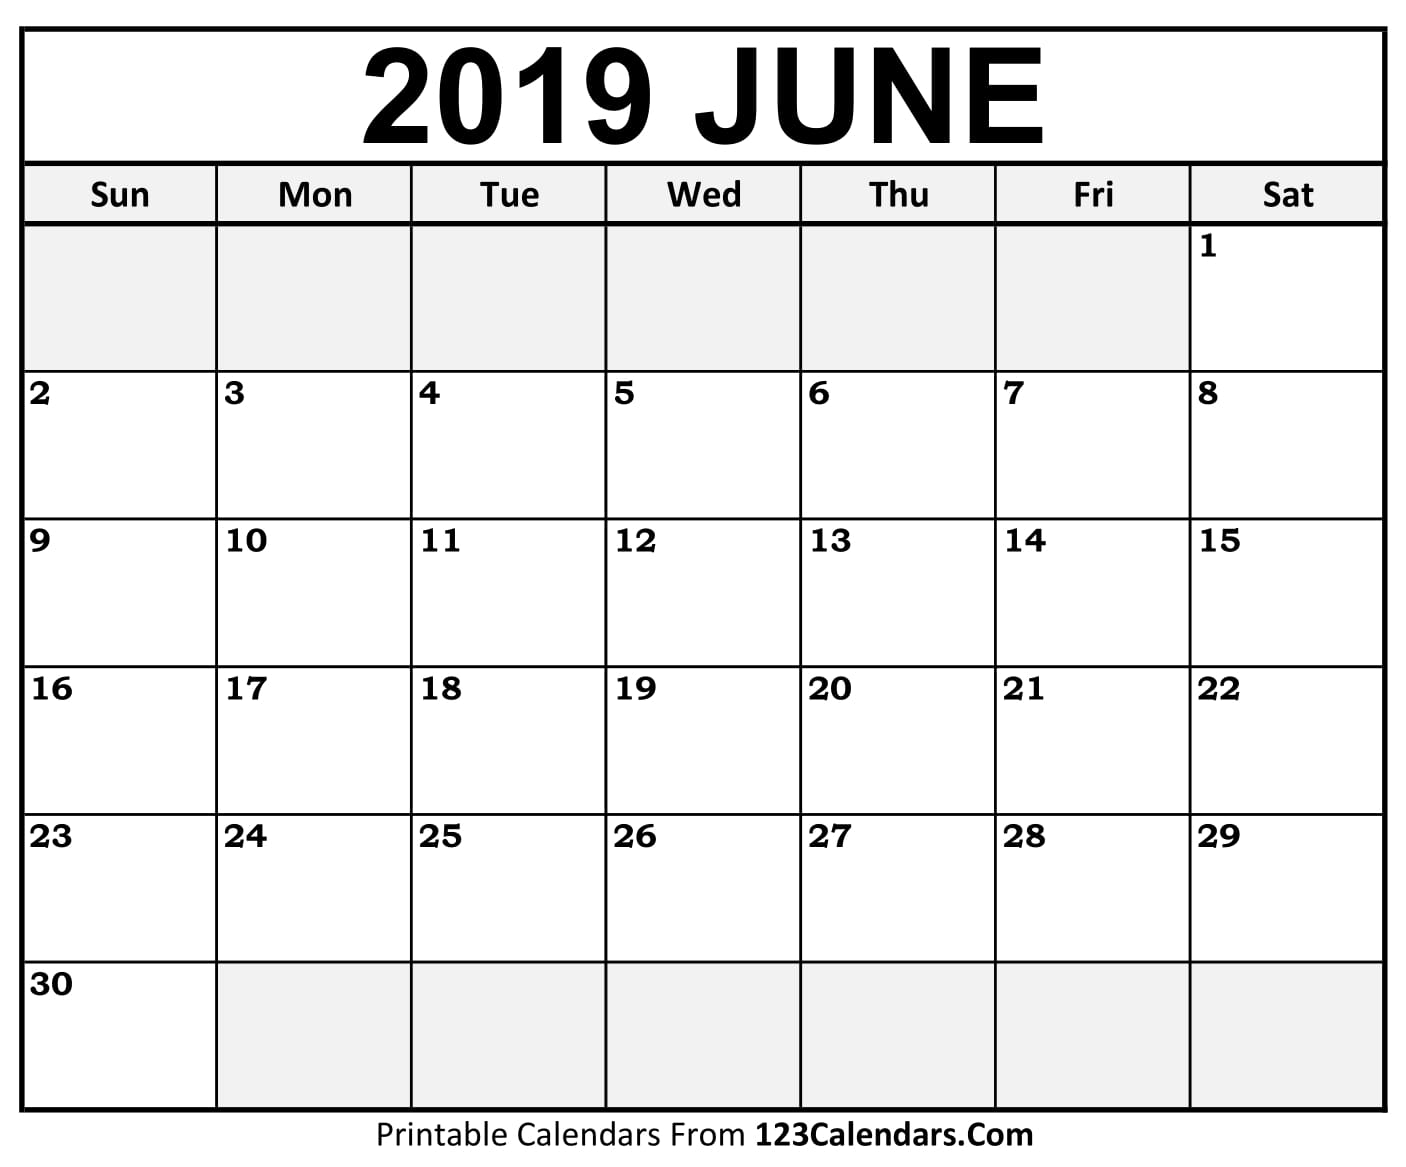 june-2019-calendar-blank-easily-printable-123calendars